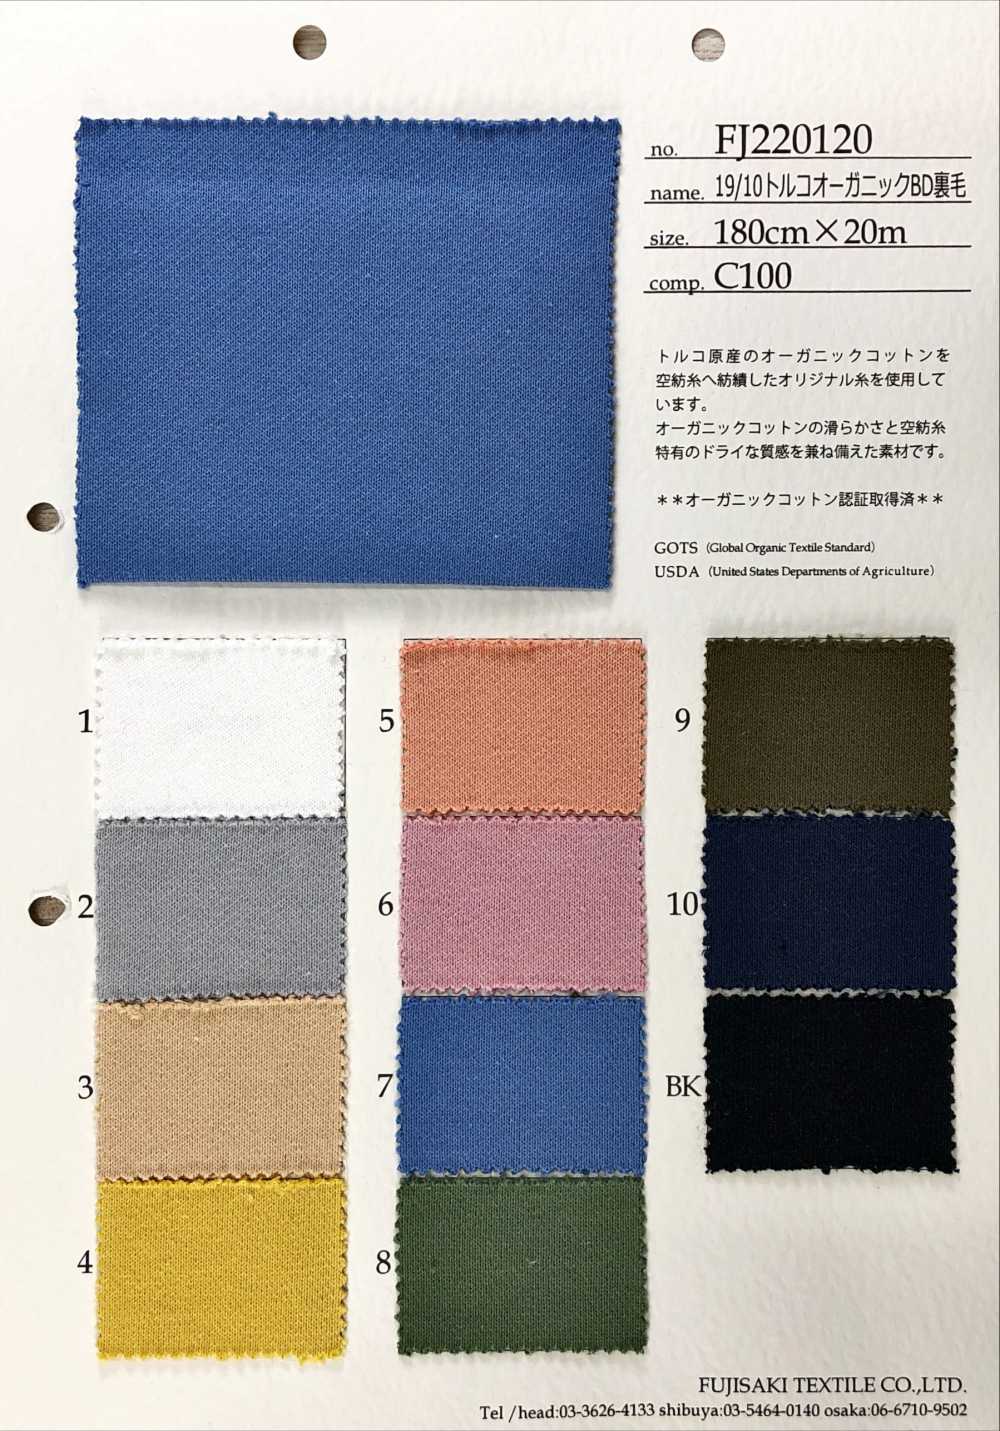 FJ220120 19/10 土耳其有机 BD毛圈布[面料] Fujisaki Textile